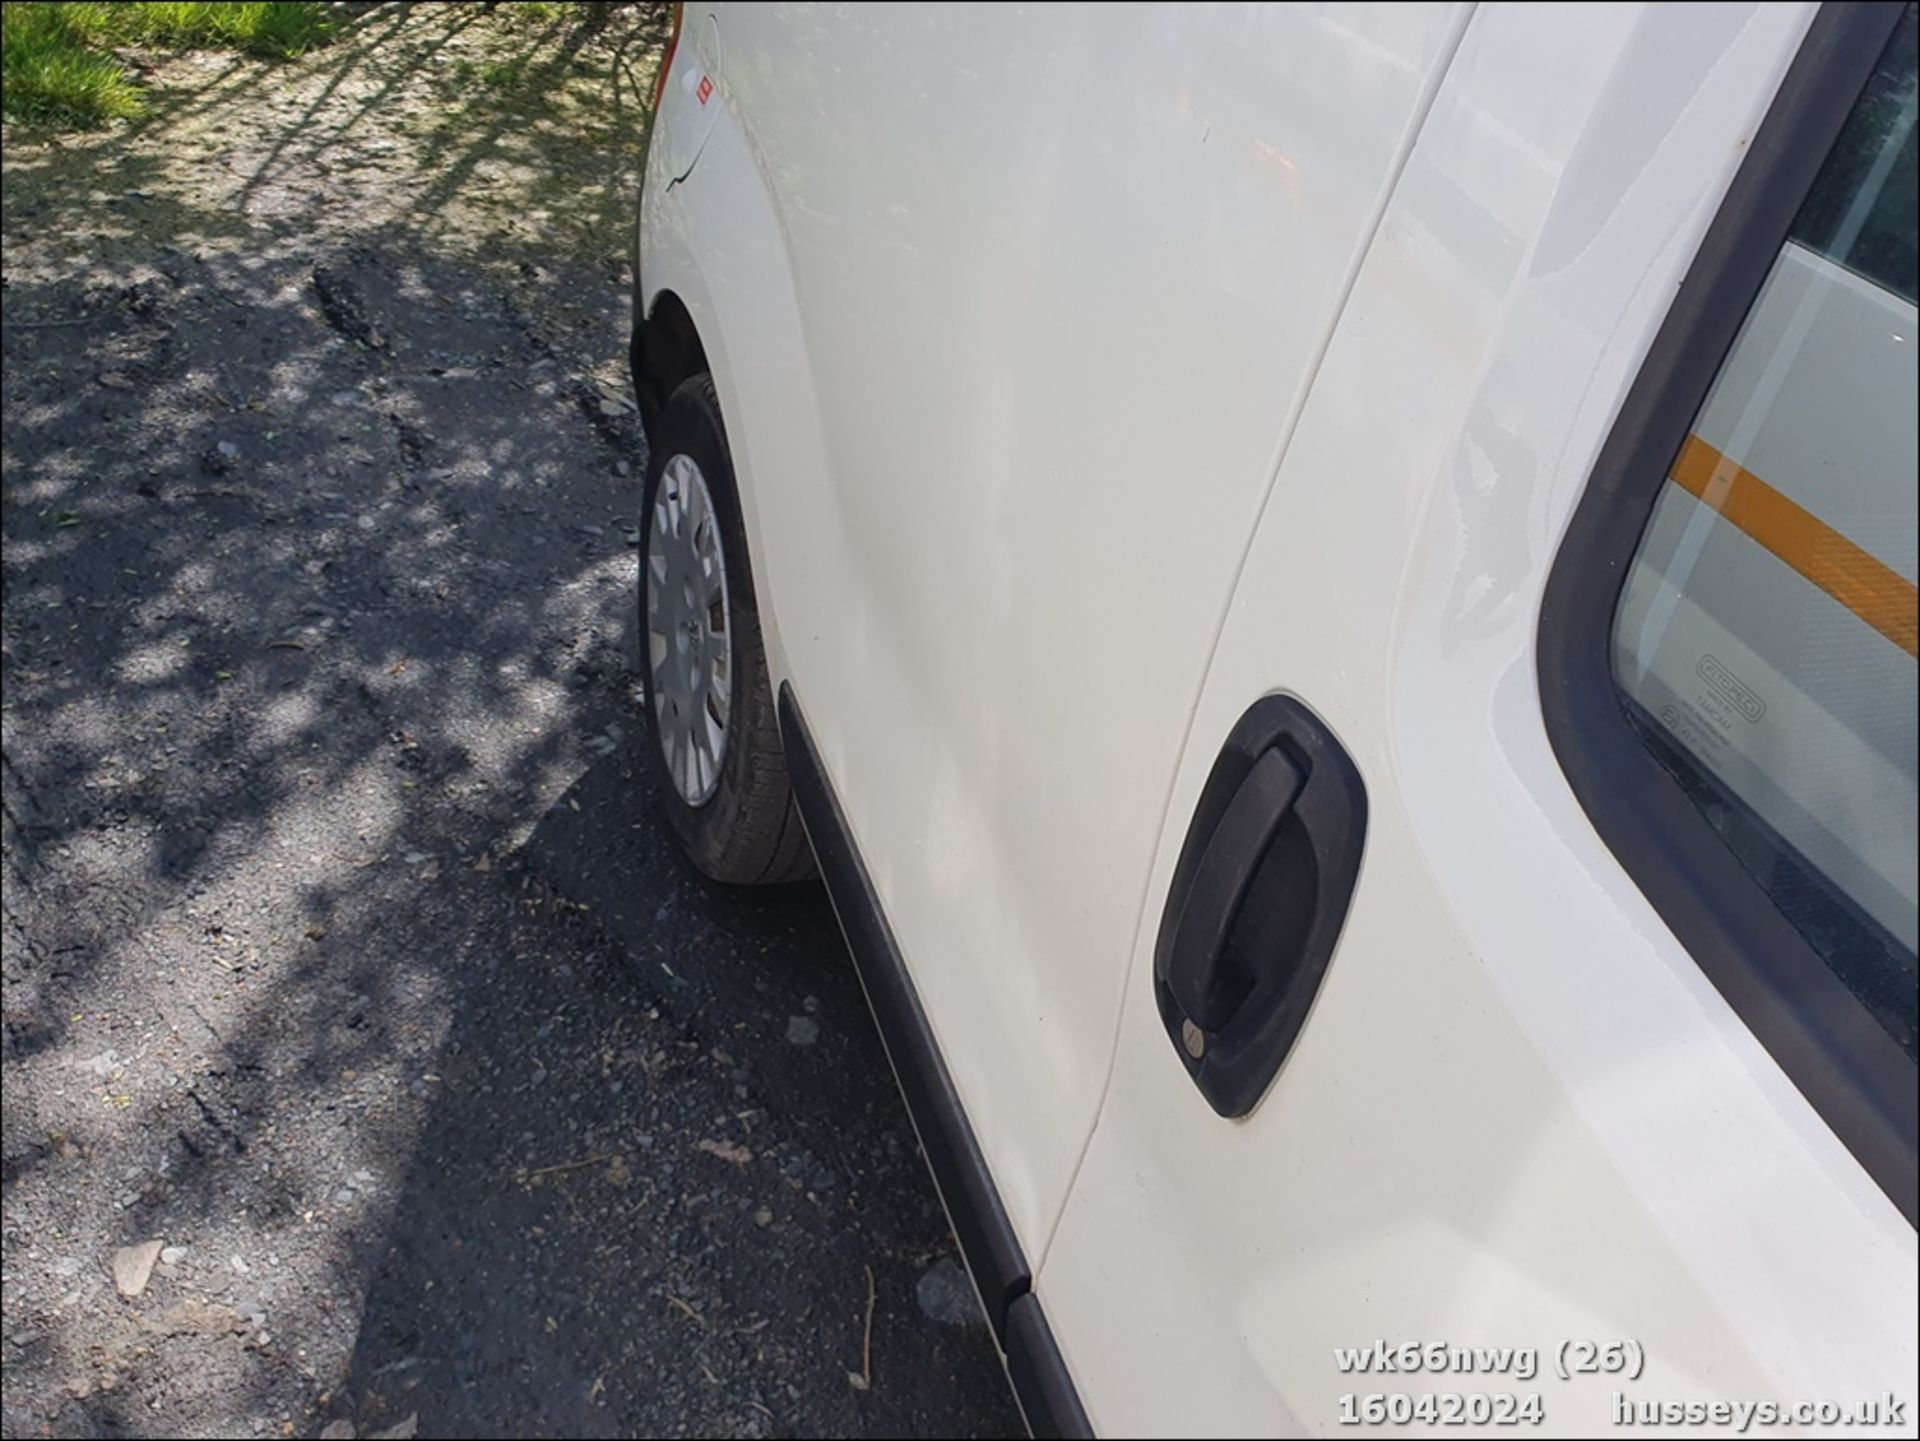 16/66 PEUGEOT BIPPER SE HDI - 1248cc Van (White, 160k) - Image 27 of 35